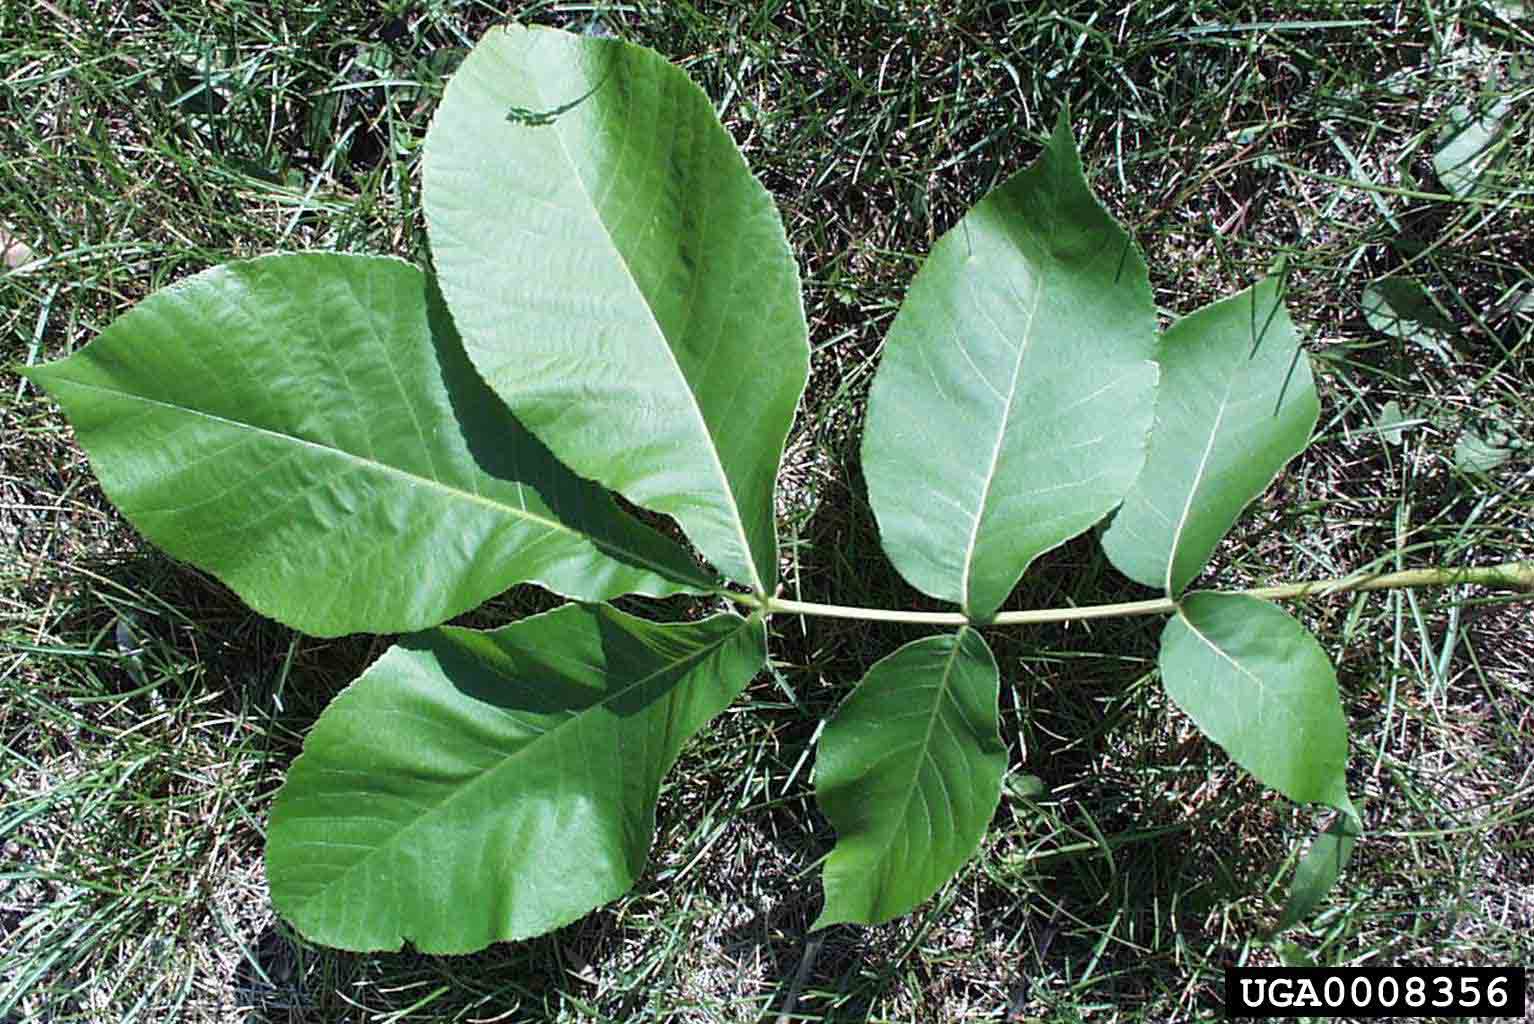 Shellbark hickory leaf, 15"-22" long